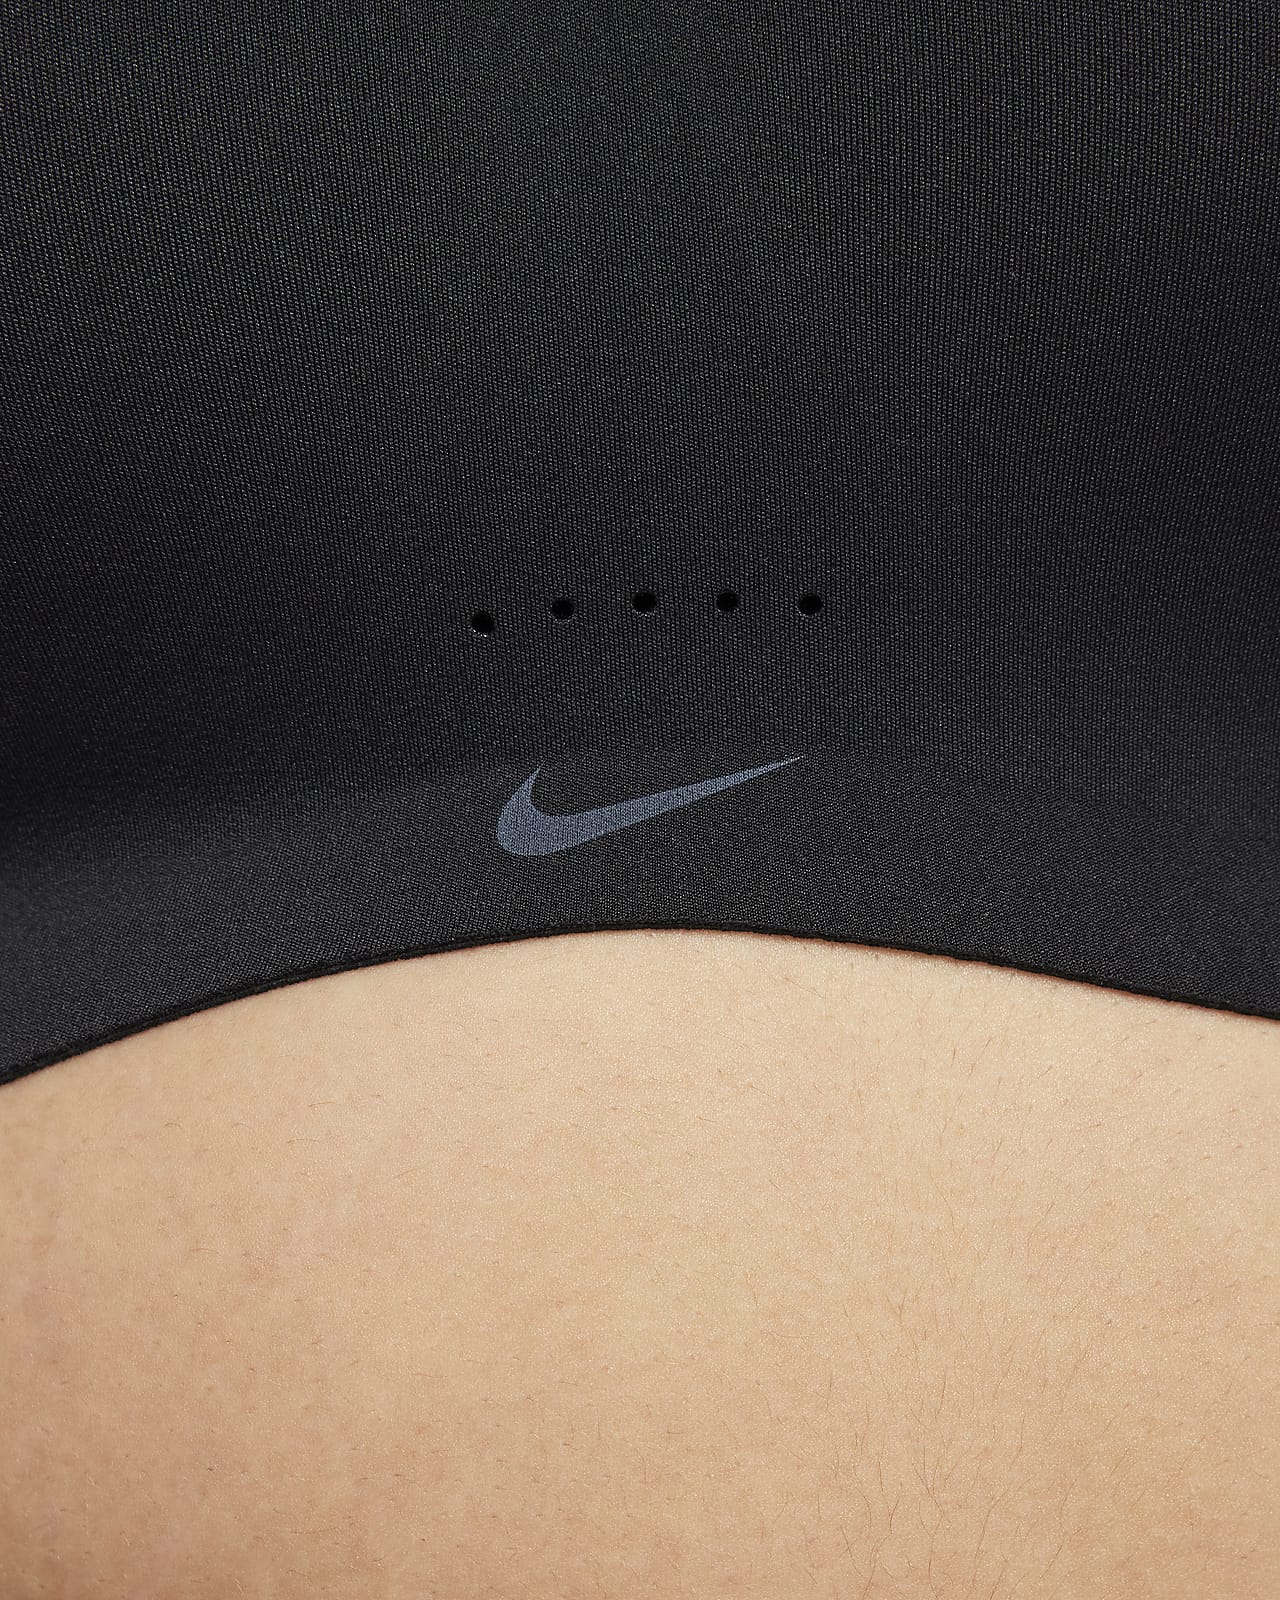 NWT Nike Alate Minimalist Light Support Padded Sports Bra Cocoa Women's S  (C-E)